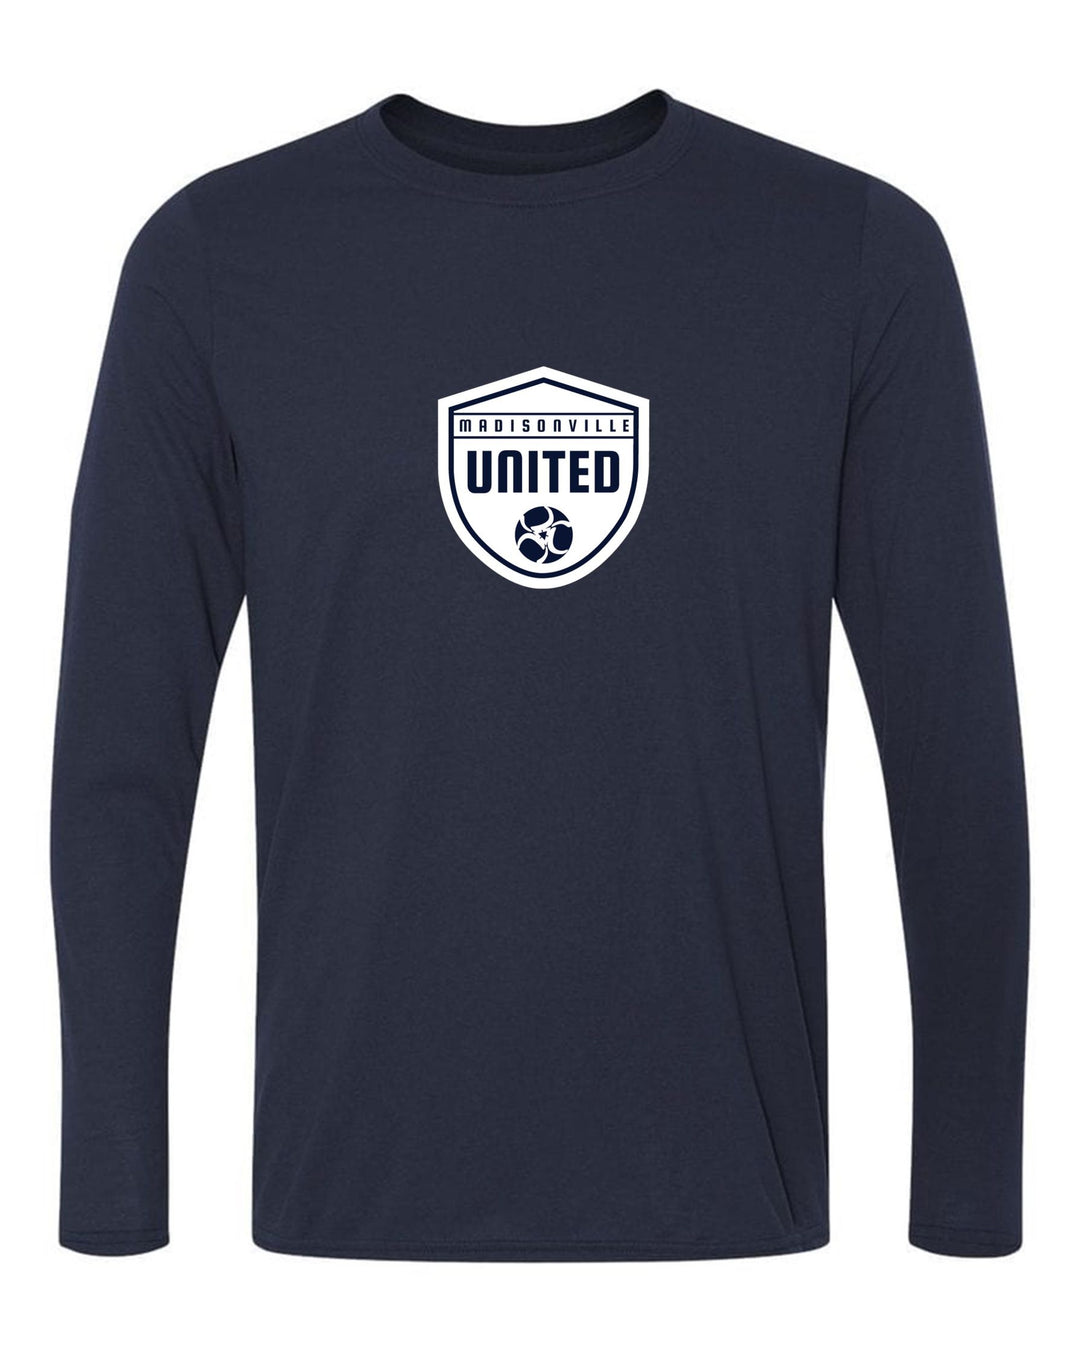 Madisonville United Long-Sleeve T-Shirt Madisonville United Spiritwear YOUTH SMALL NAVY - Third Coast Soccer